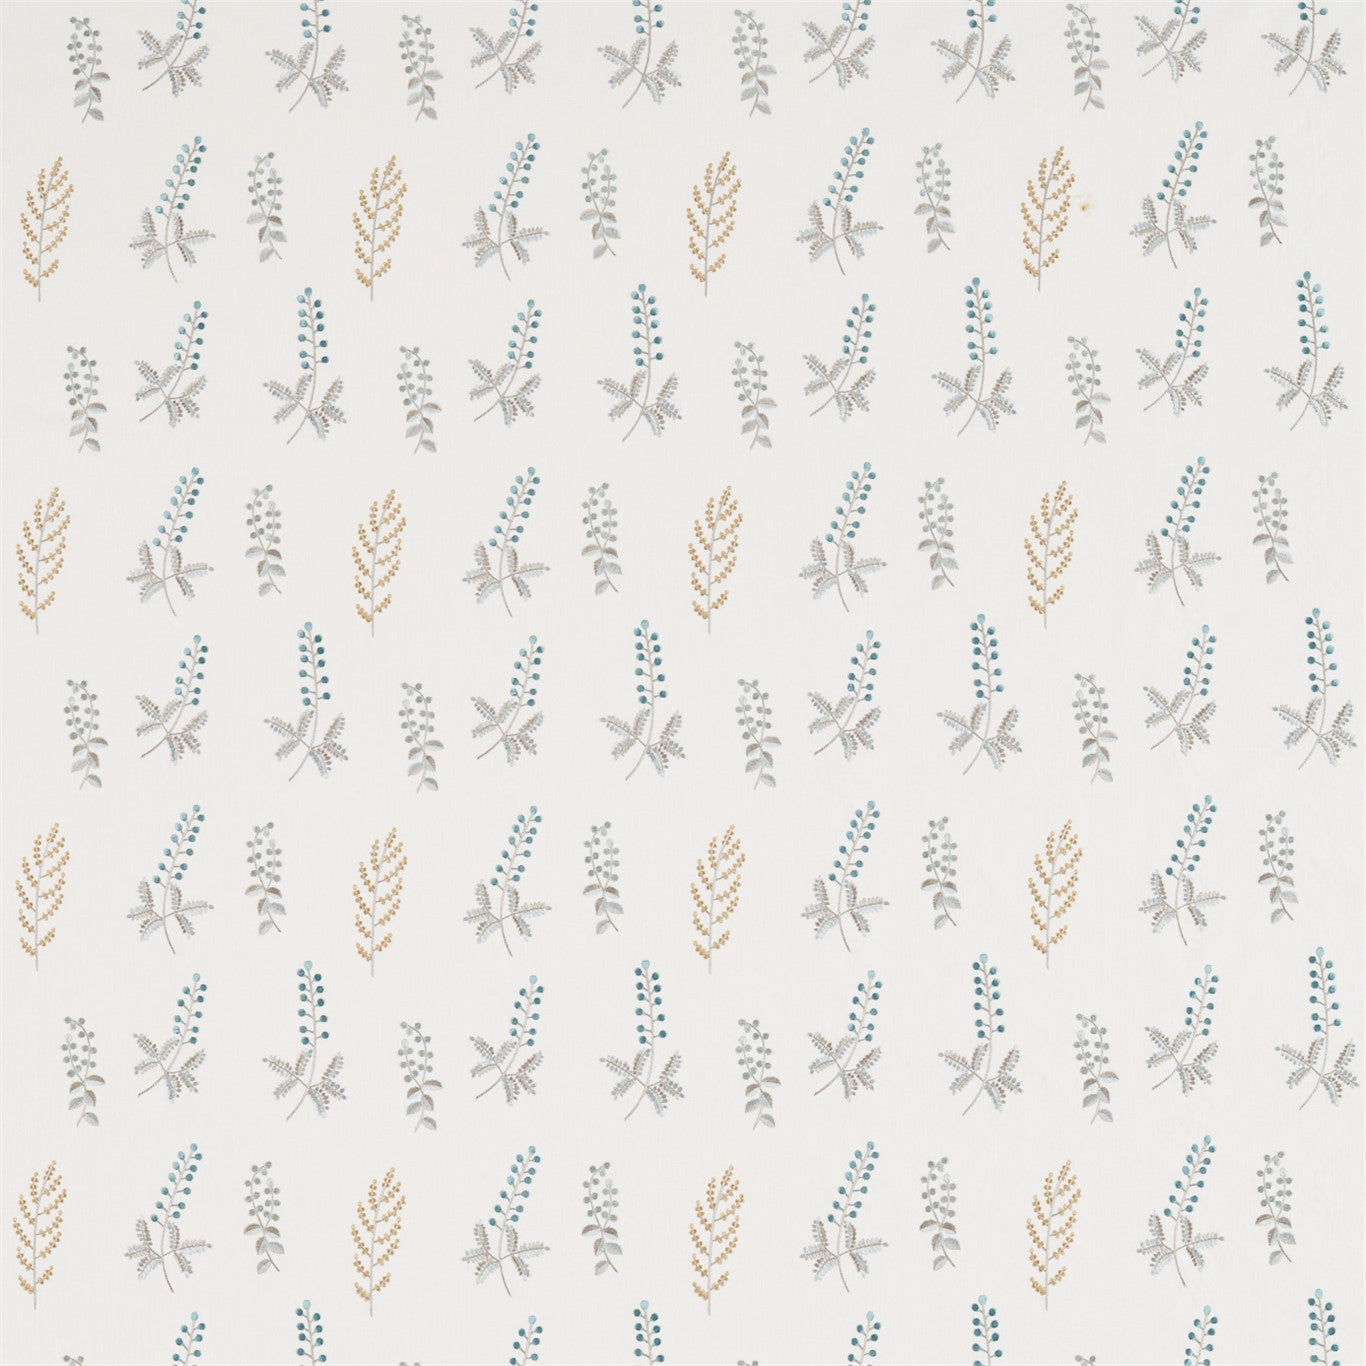 Bilberry Fabric by Sanderson Home - DHPO236424 - Dijon/Teal